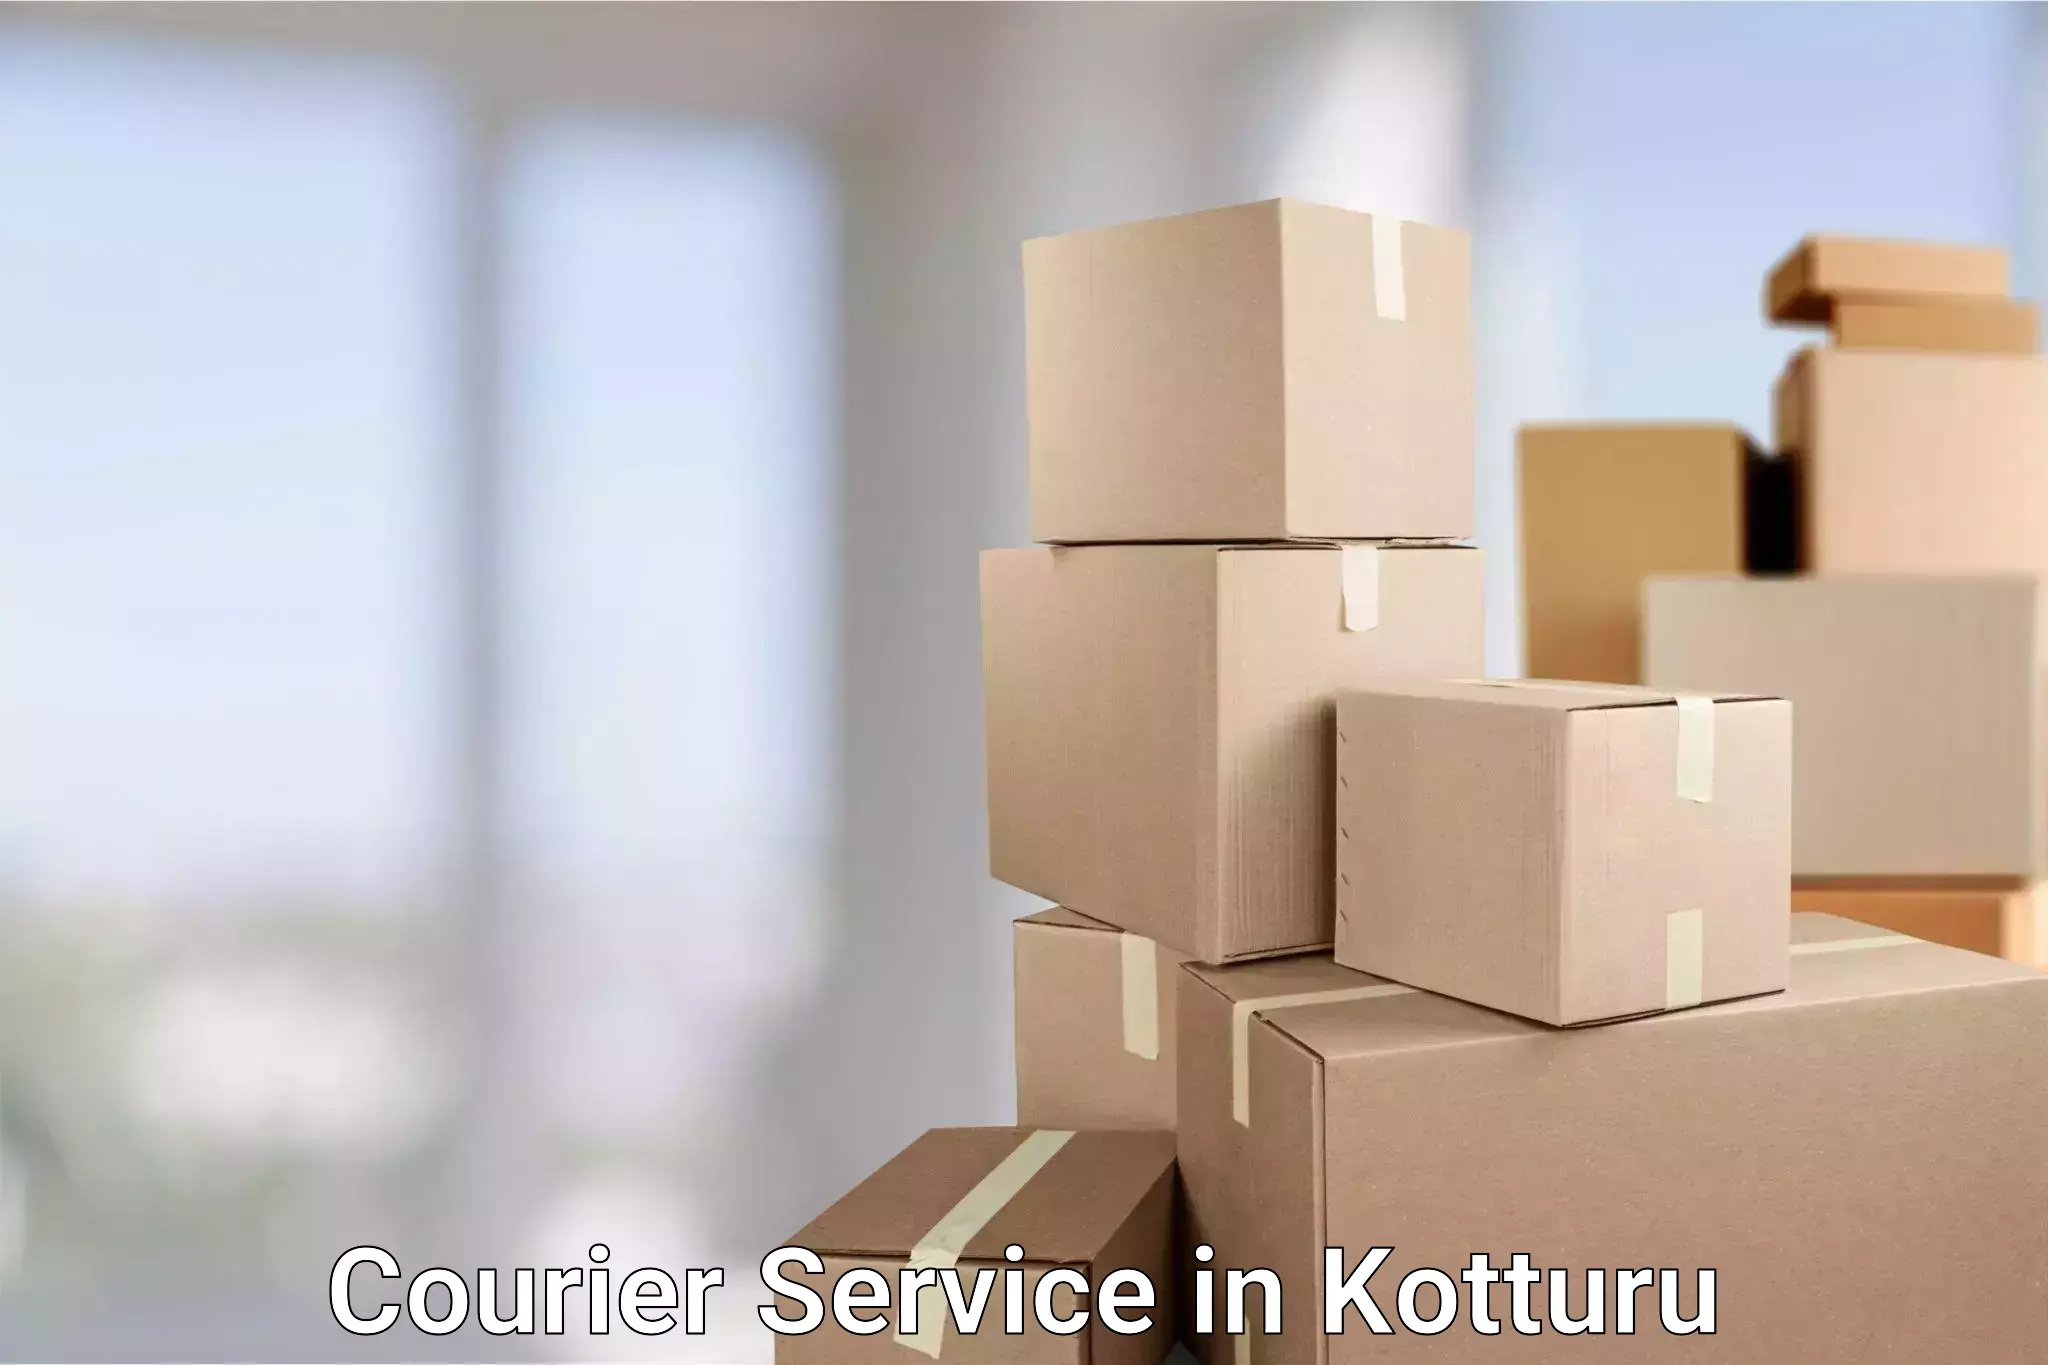 Speedy delivery service in Kotturu